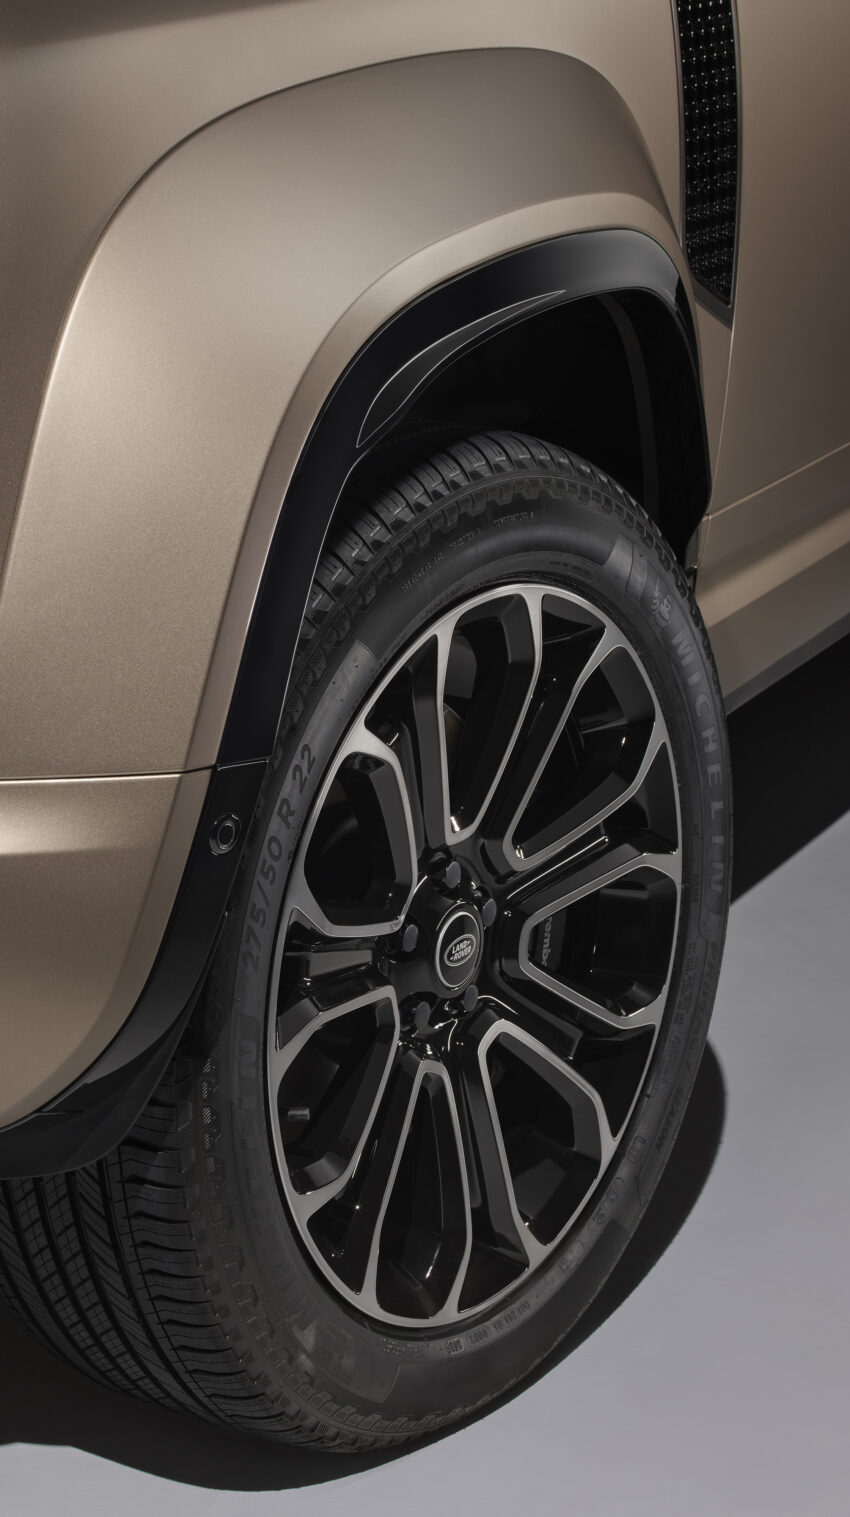 Land Rover Defender Octa 全球首发, 4.4L V8双涡轮引擎搭Mild Hybrid微型油电, 性能最强 Defender, 只需4秒破百 264275